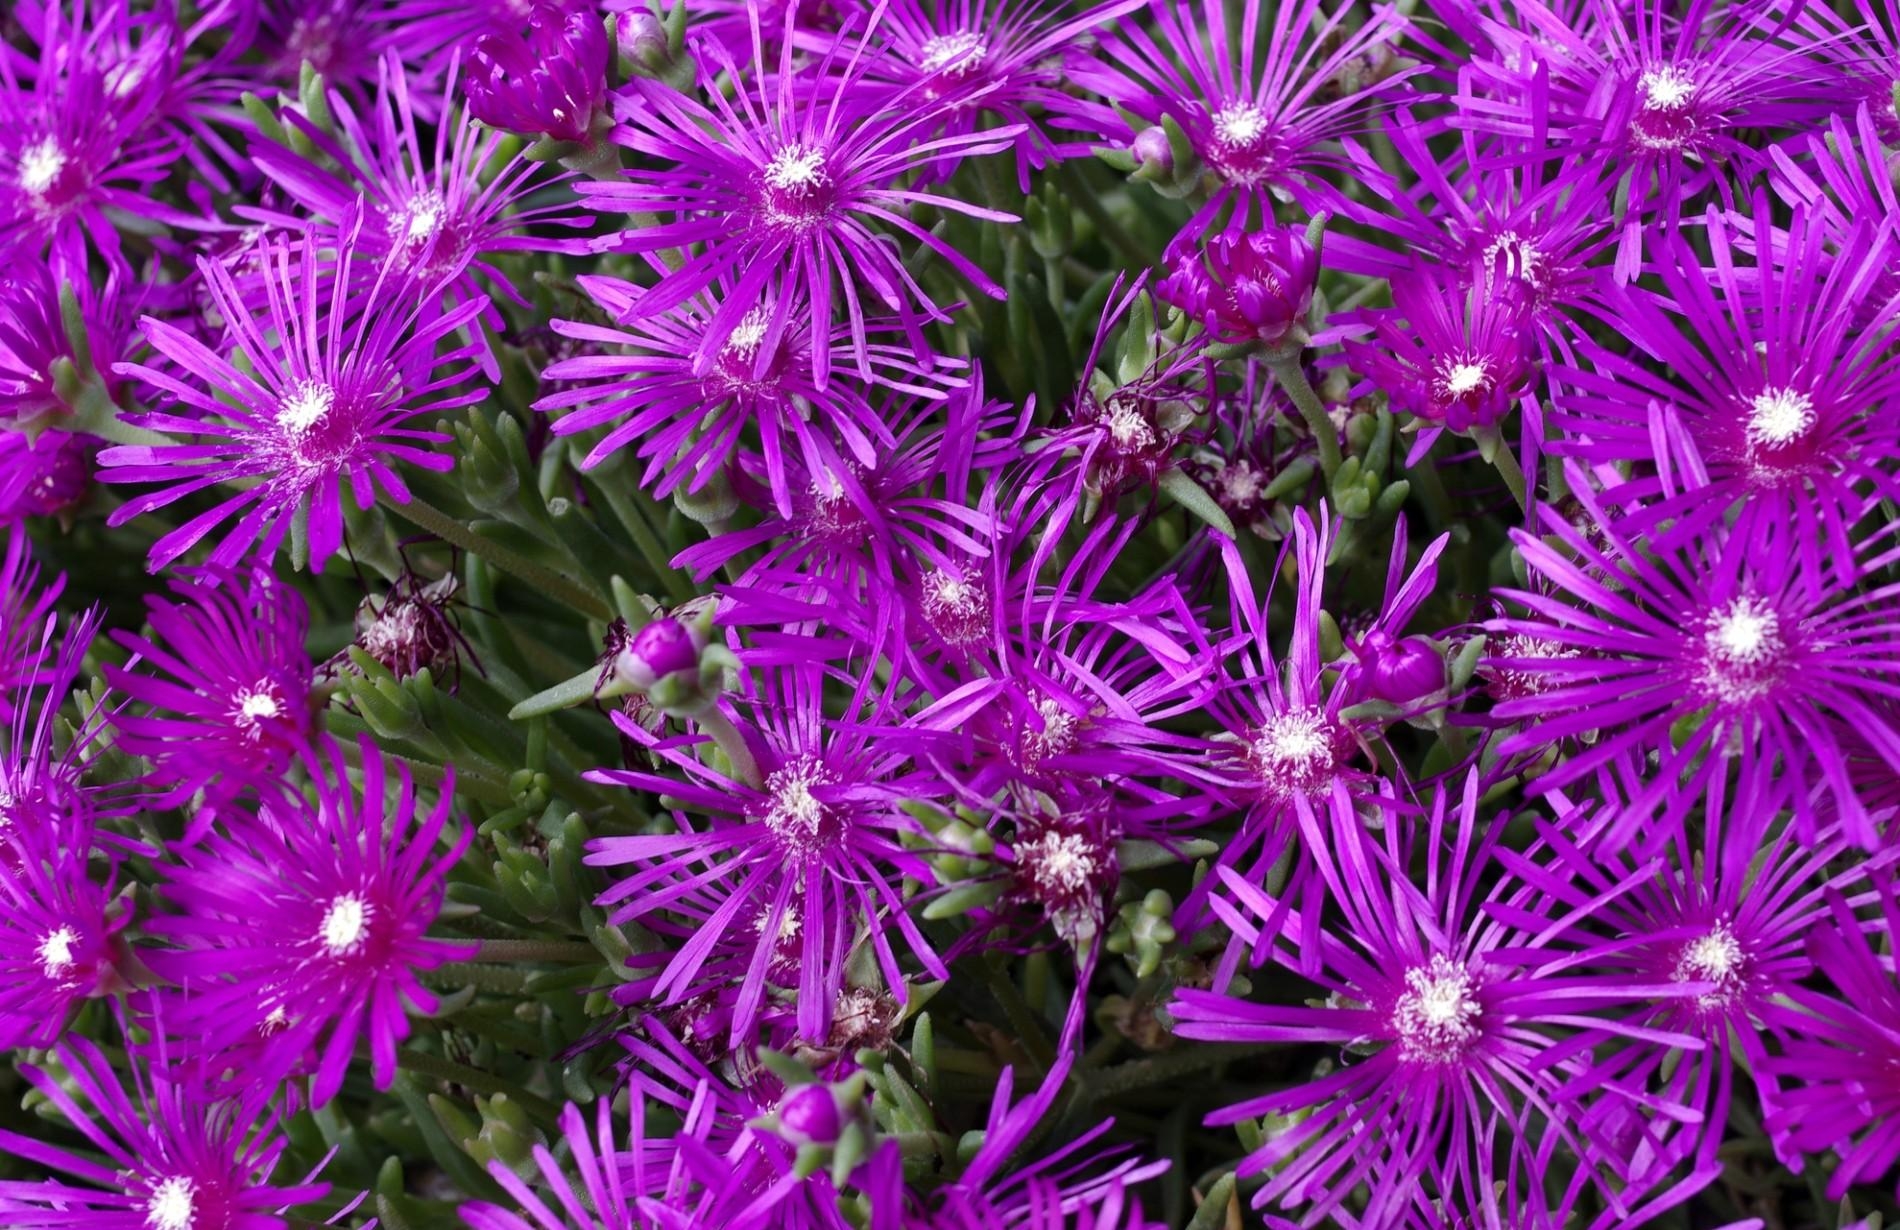 flowers, lilac, flower bed, flowerbed, purple, aptenias, apthenia High Definition image